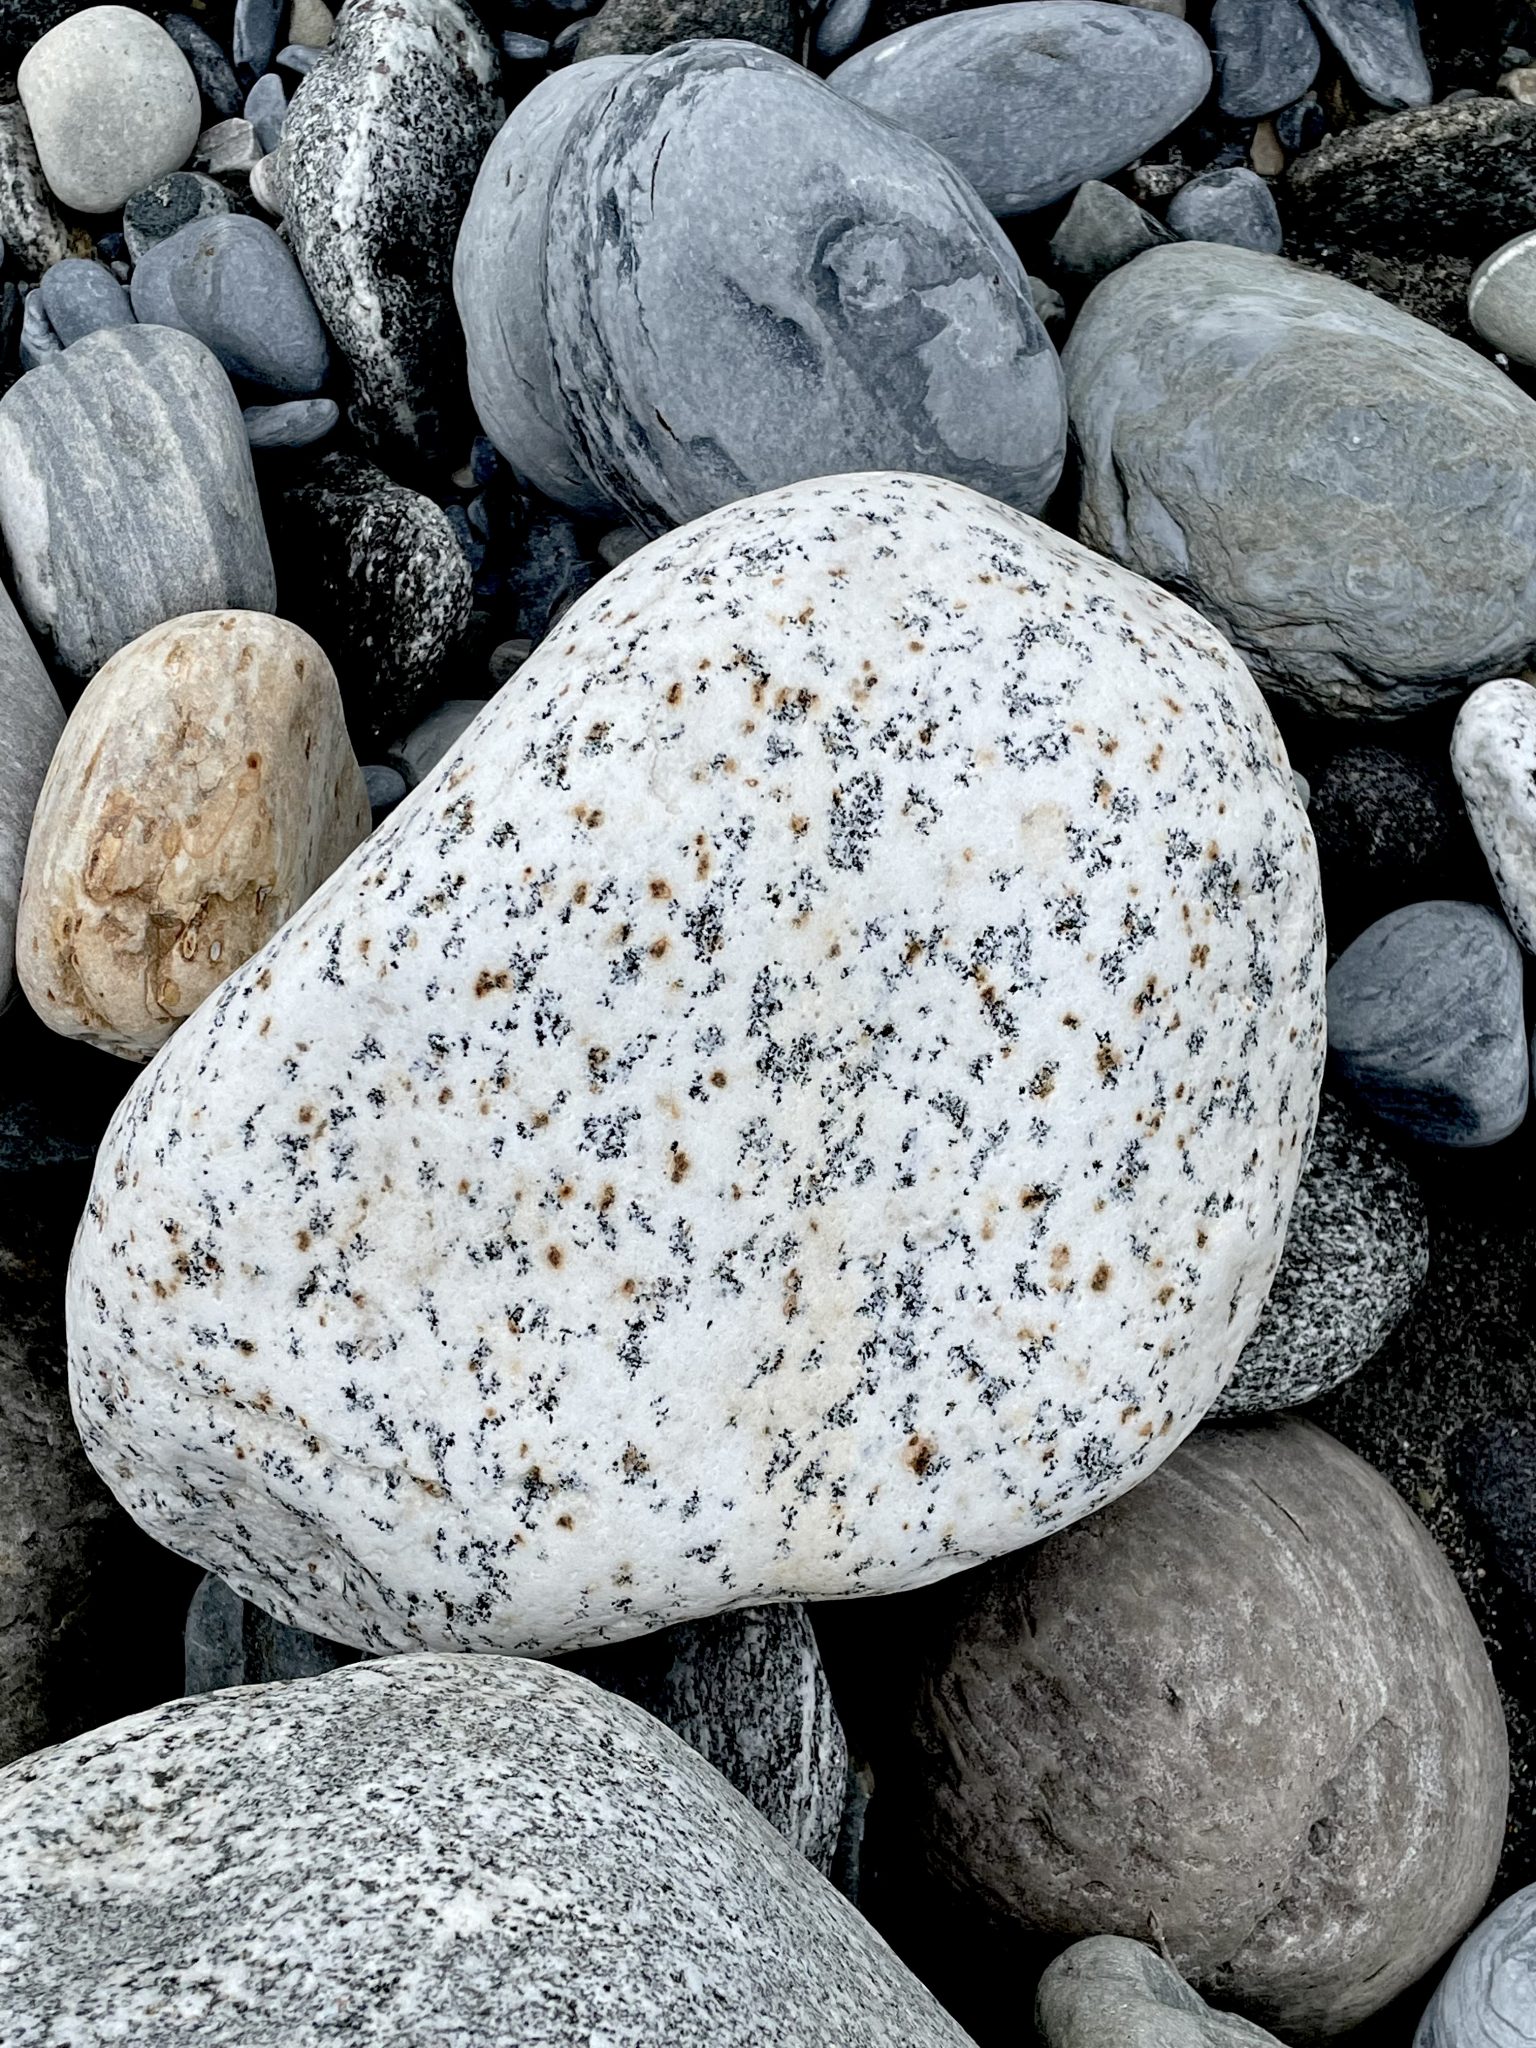 Stone art by nature. A big pebble from the banks of Seti Gandaki river. Pokhara, Nepal.